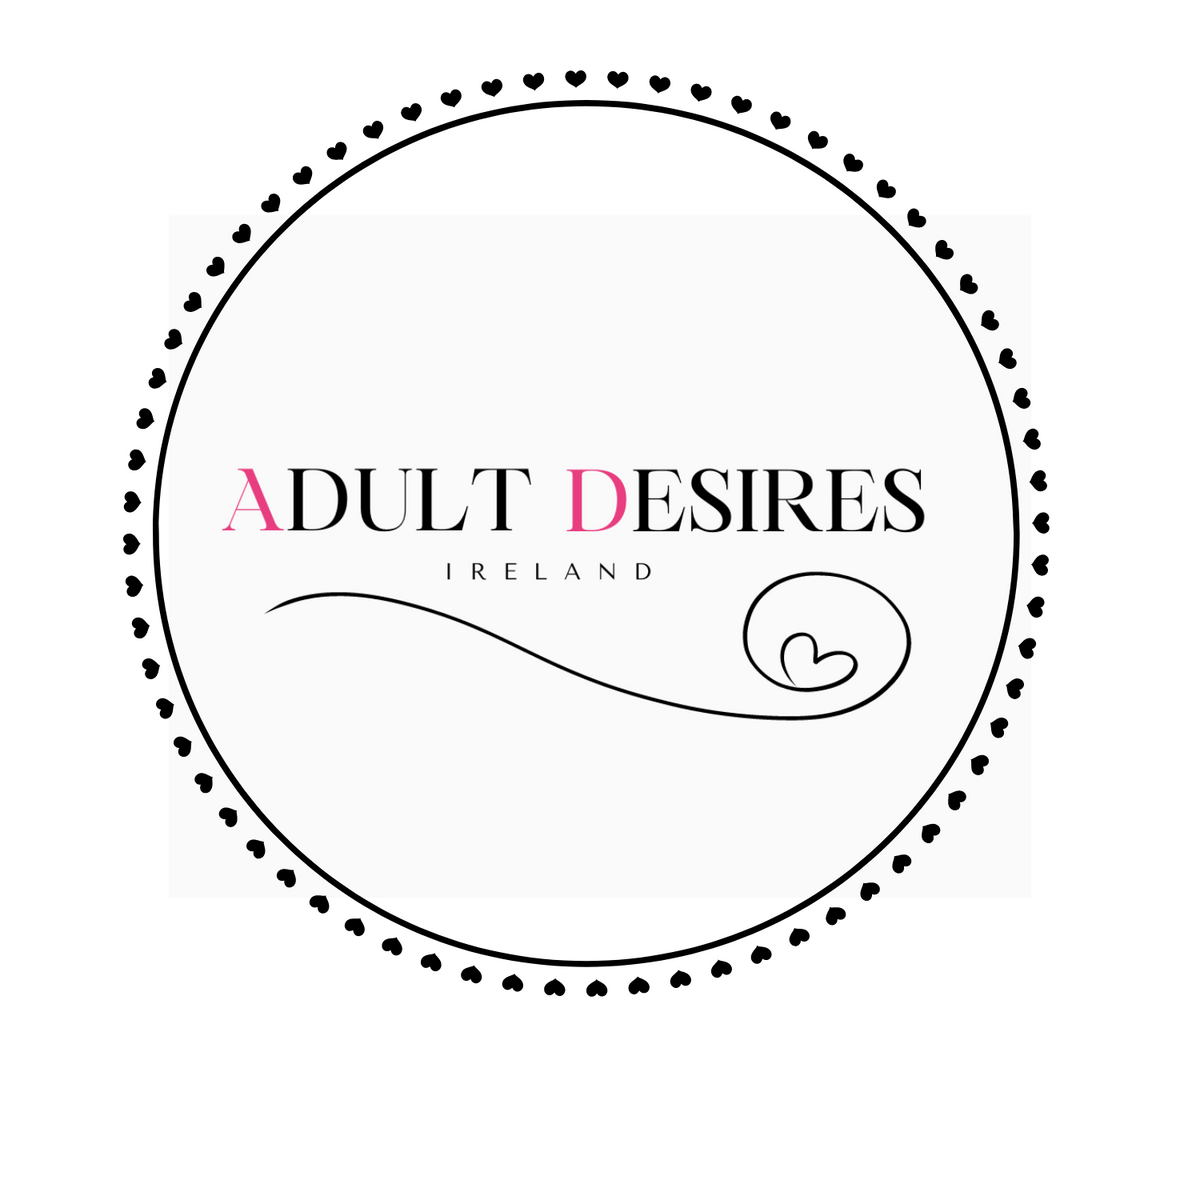 Adult Desires Ireland